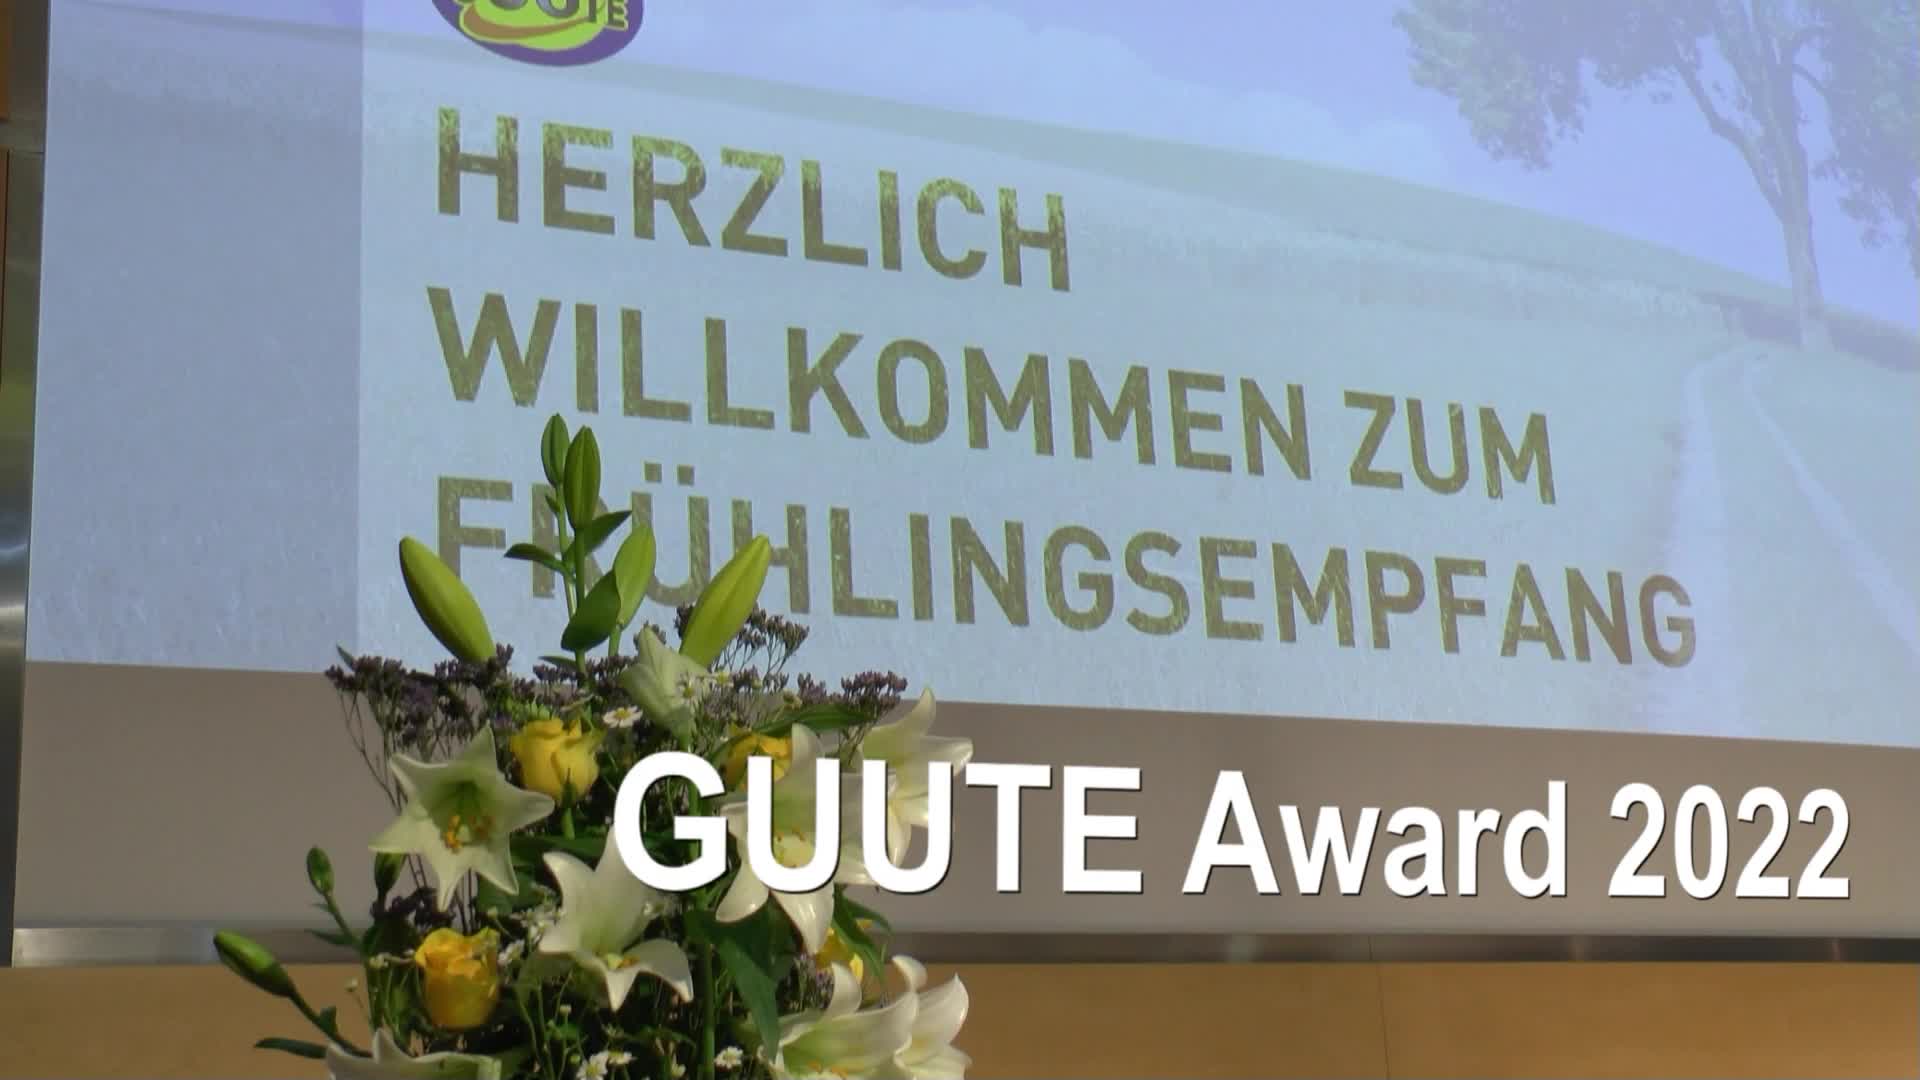 Frühlingsempfang GUUTE Award 2022